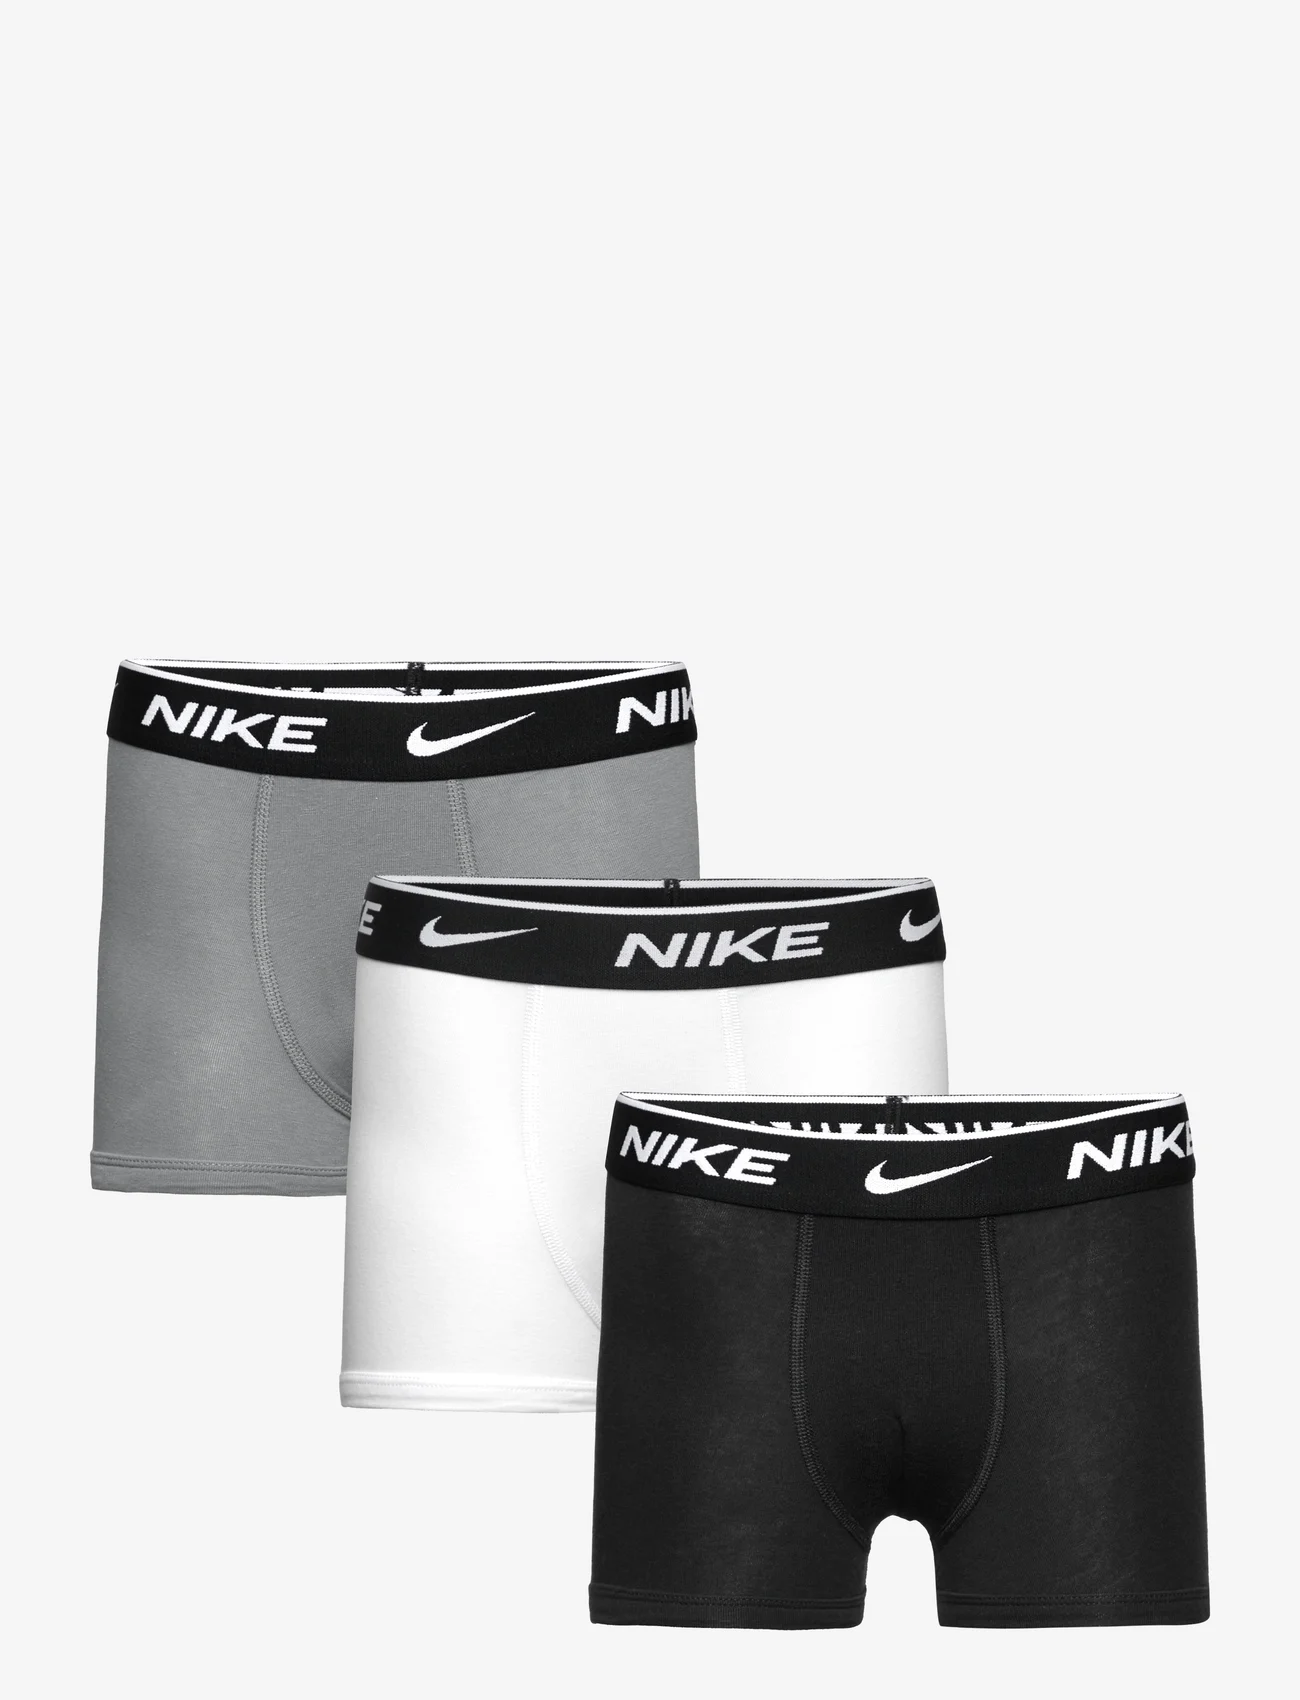 Nike - NHB NHB E DAY COTTON STRETCH 3 / NHB NHB E DAY COTTON STRETC - underpants - black / white - 0